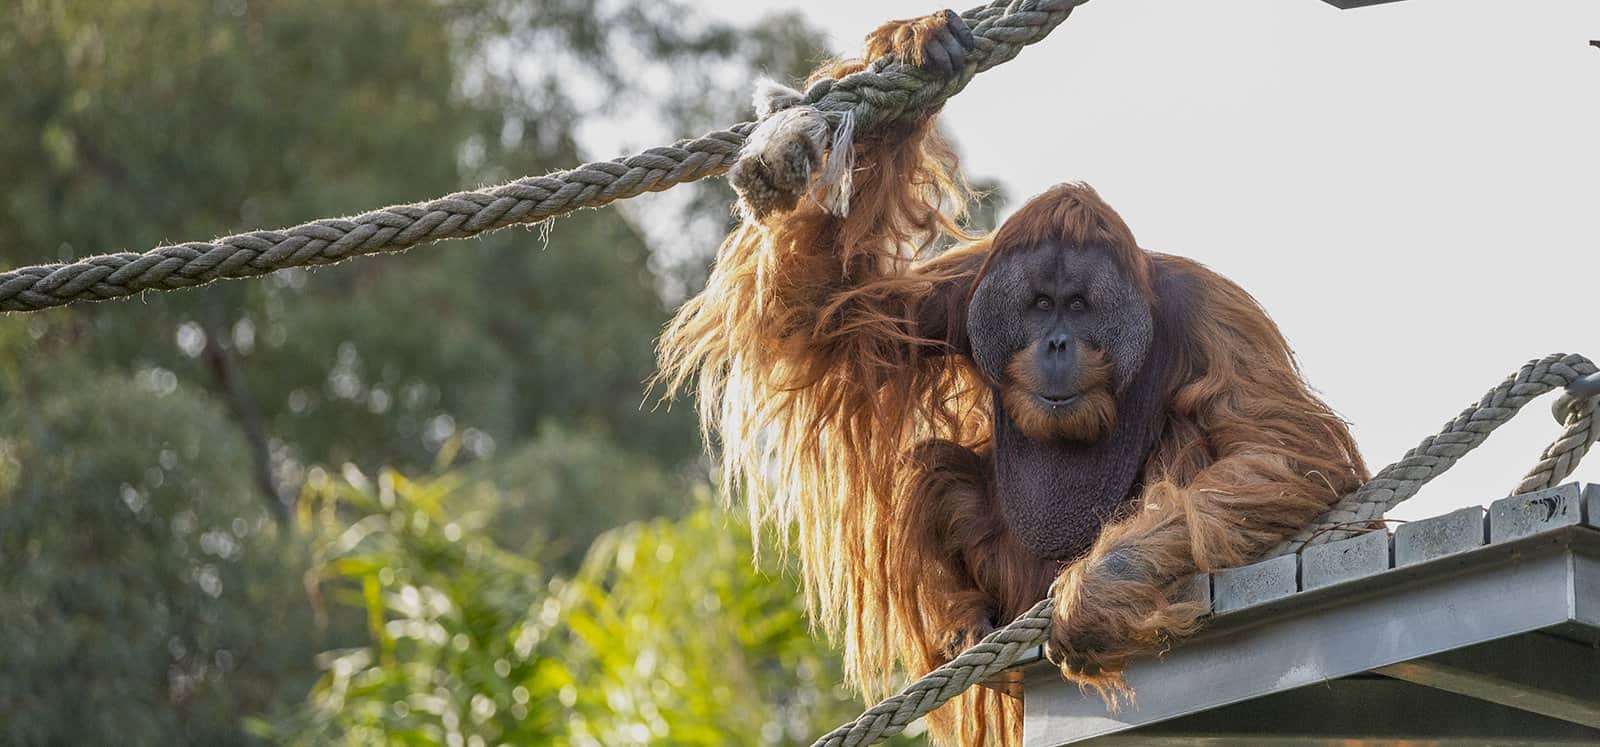 Sumatran Orangutan holding onto ropes at Adelaide Zoo